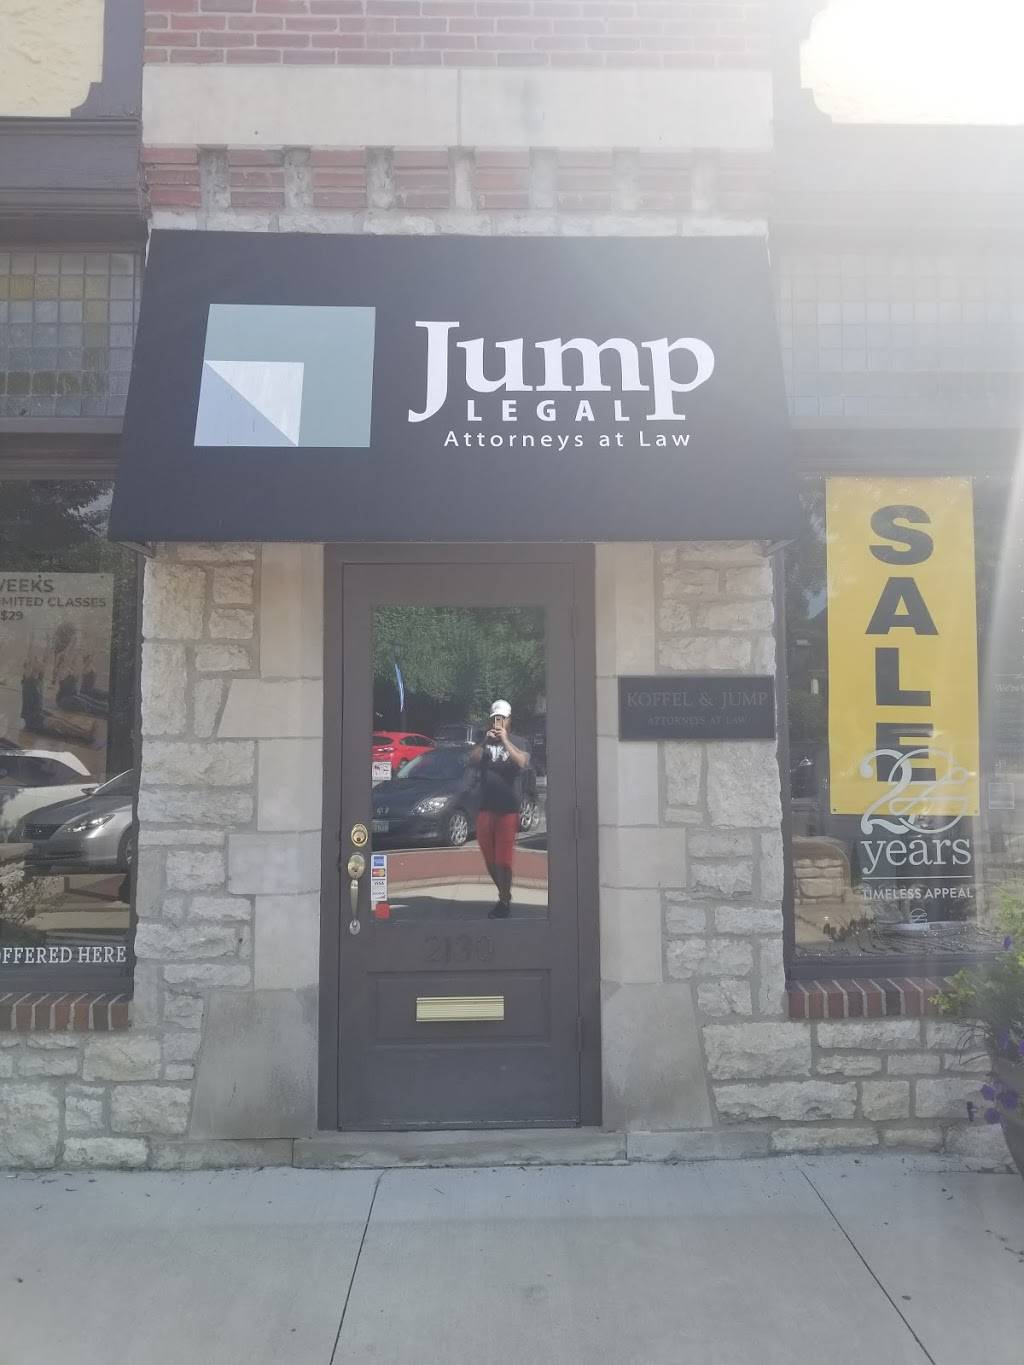 Jump Legal - Bankruptcy Attorneys | 2130 Arlington Ave, Columbus, OH 43221, USA | Phone: (614) 481-4480